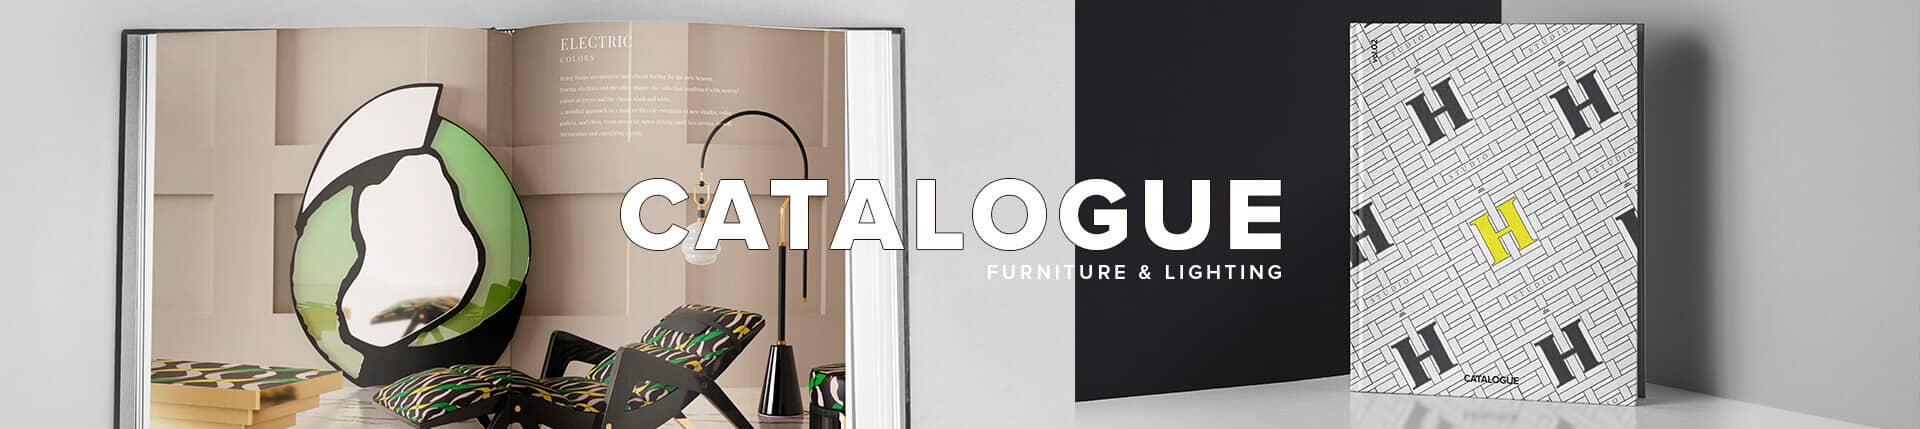 modern furniture and lighting catalog